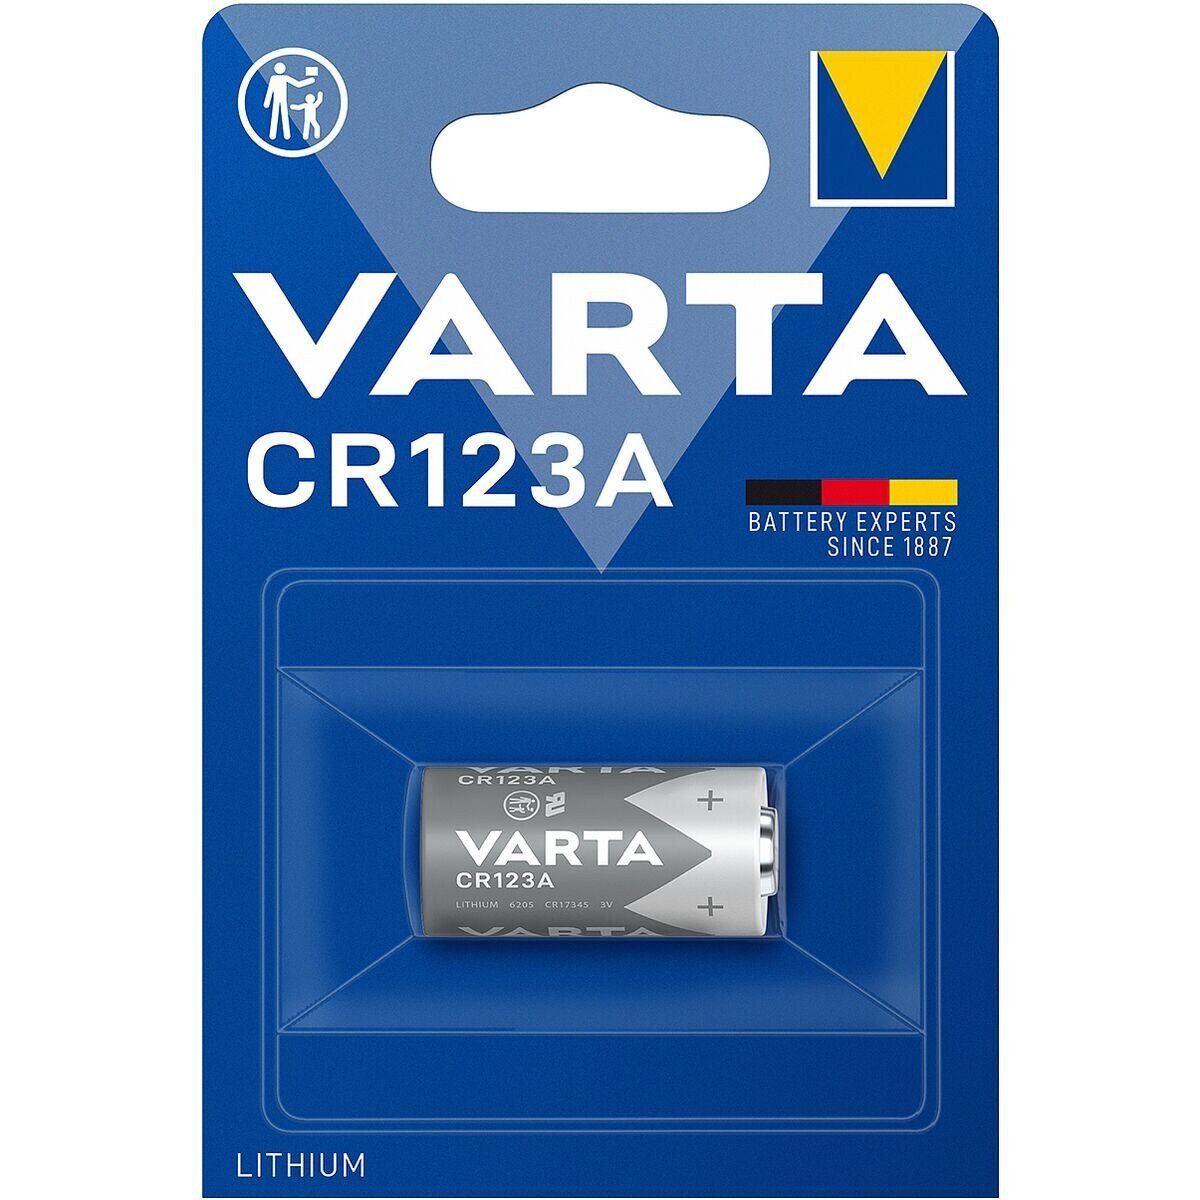 Lithium 3 V, VARTA V, 1 Photo (3 Lithium St), Fotobatterie, CR123A,